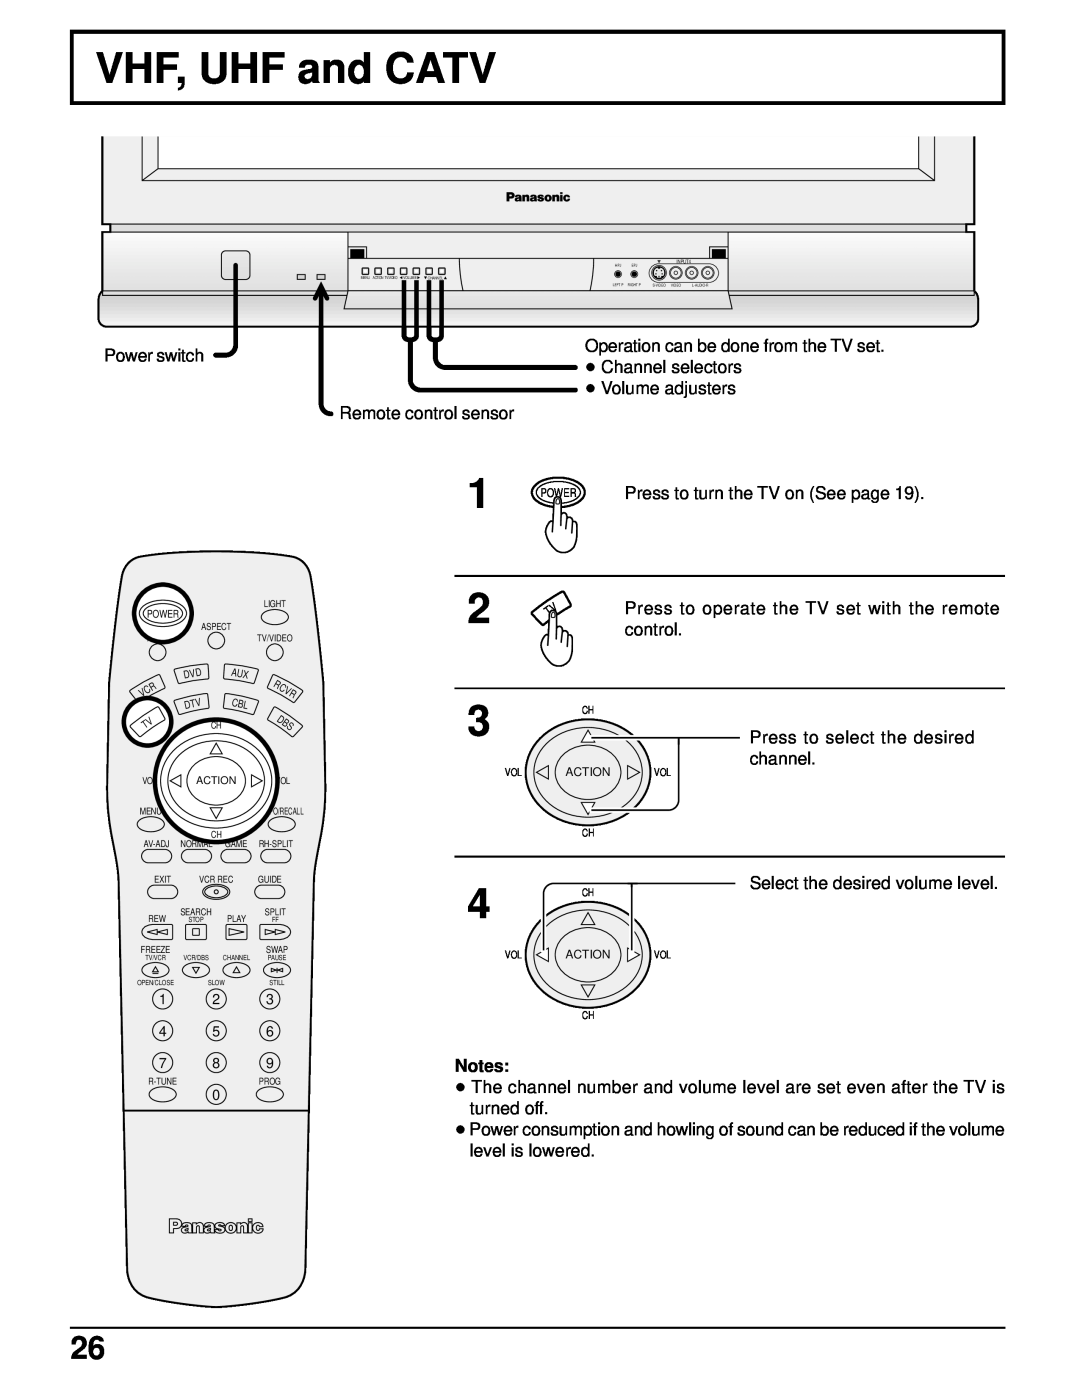 Panasonic CT 34WX50 manual VHF, UHF and CATV, 3 CH, 4 CH, Power switch 